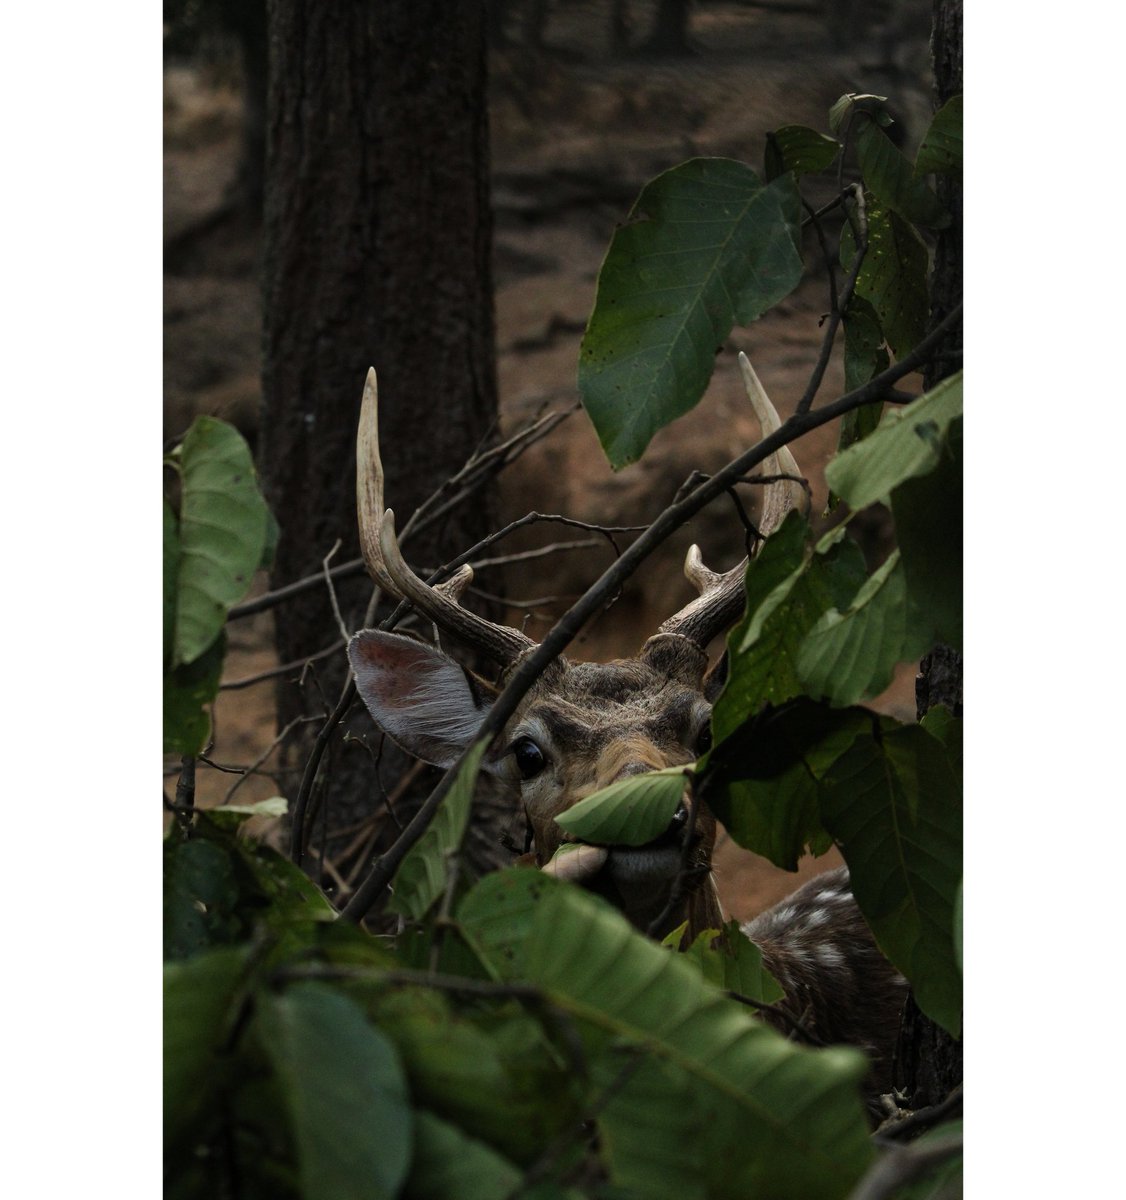 The deer is watching me through the gaps in the leaves...🌱🌿
#deerseason #deer #deerseason2019 #wildlife #wildlifephotography #photography #photooftheday #photoshoot #deerphotography  #outdoor #sunlight #eveningtime #natgeo #natgeotravel #natgeowild #natgeoyourshot #natgeography